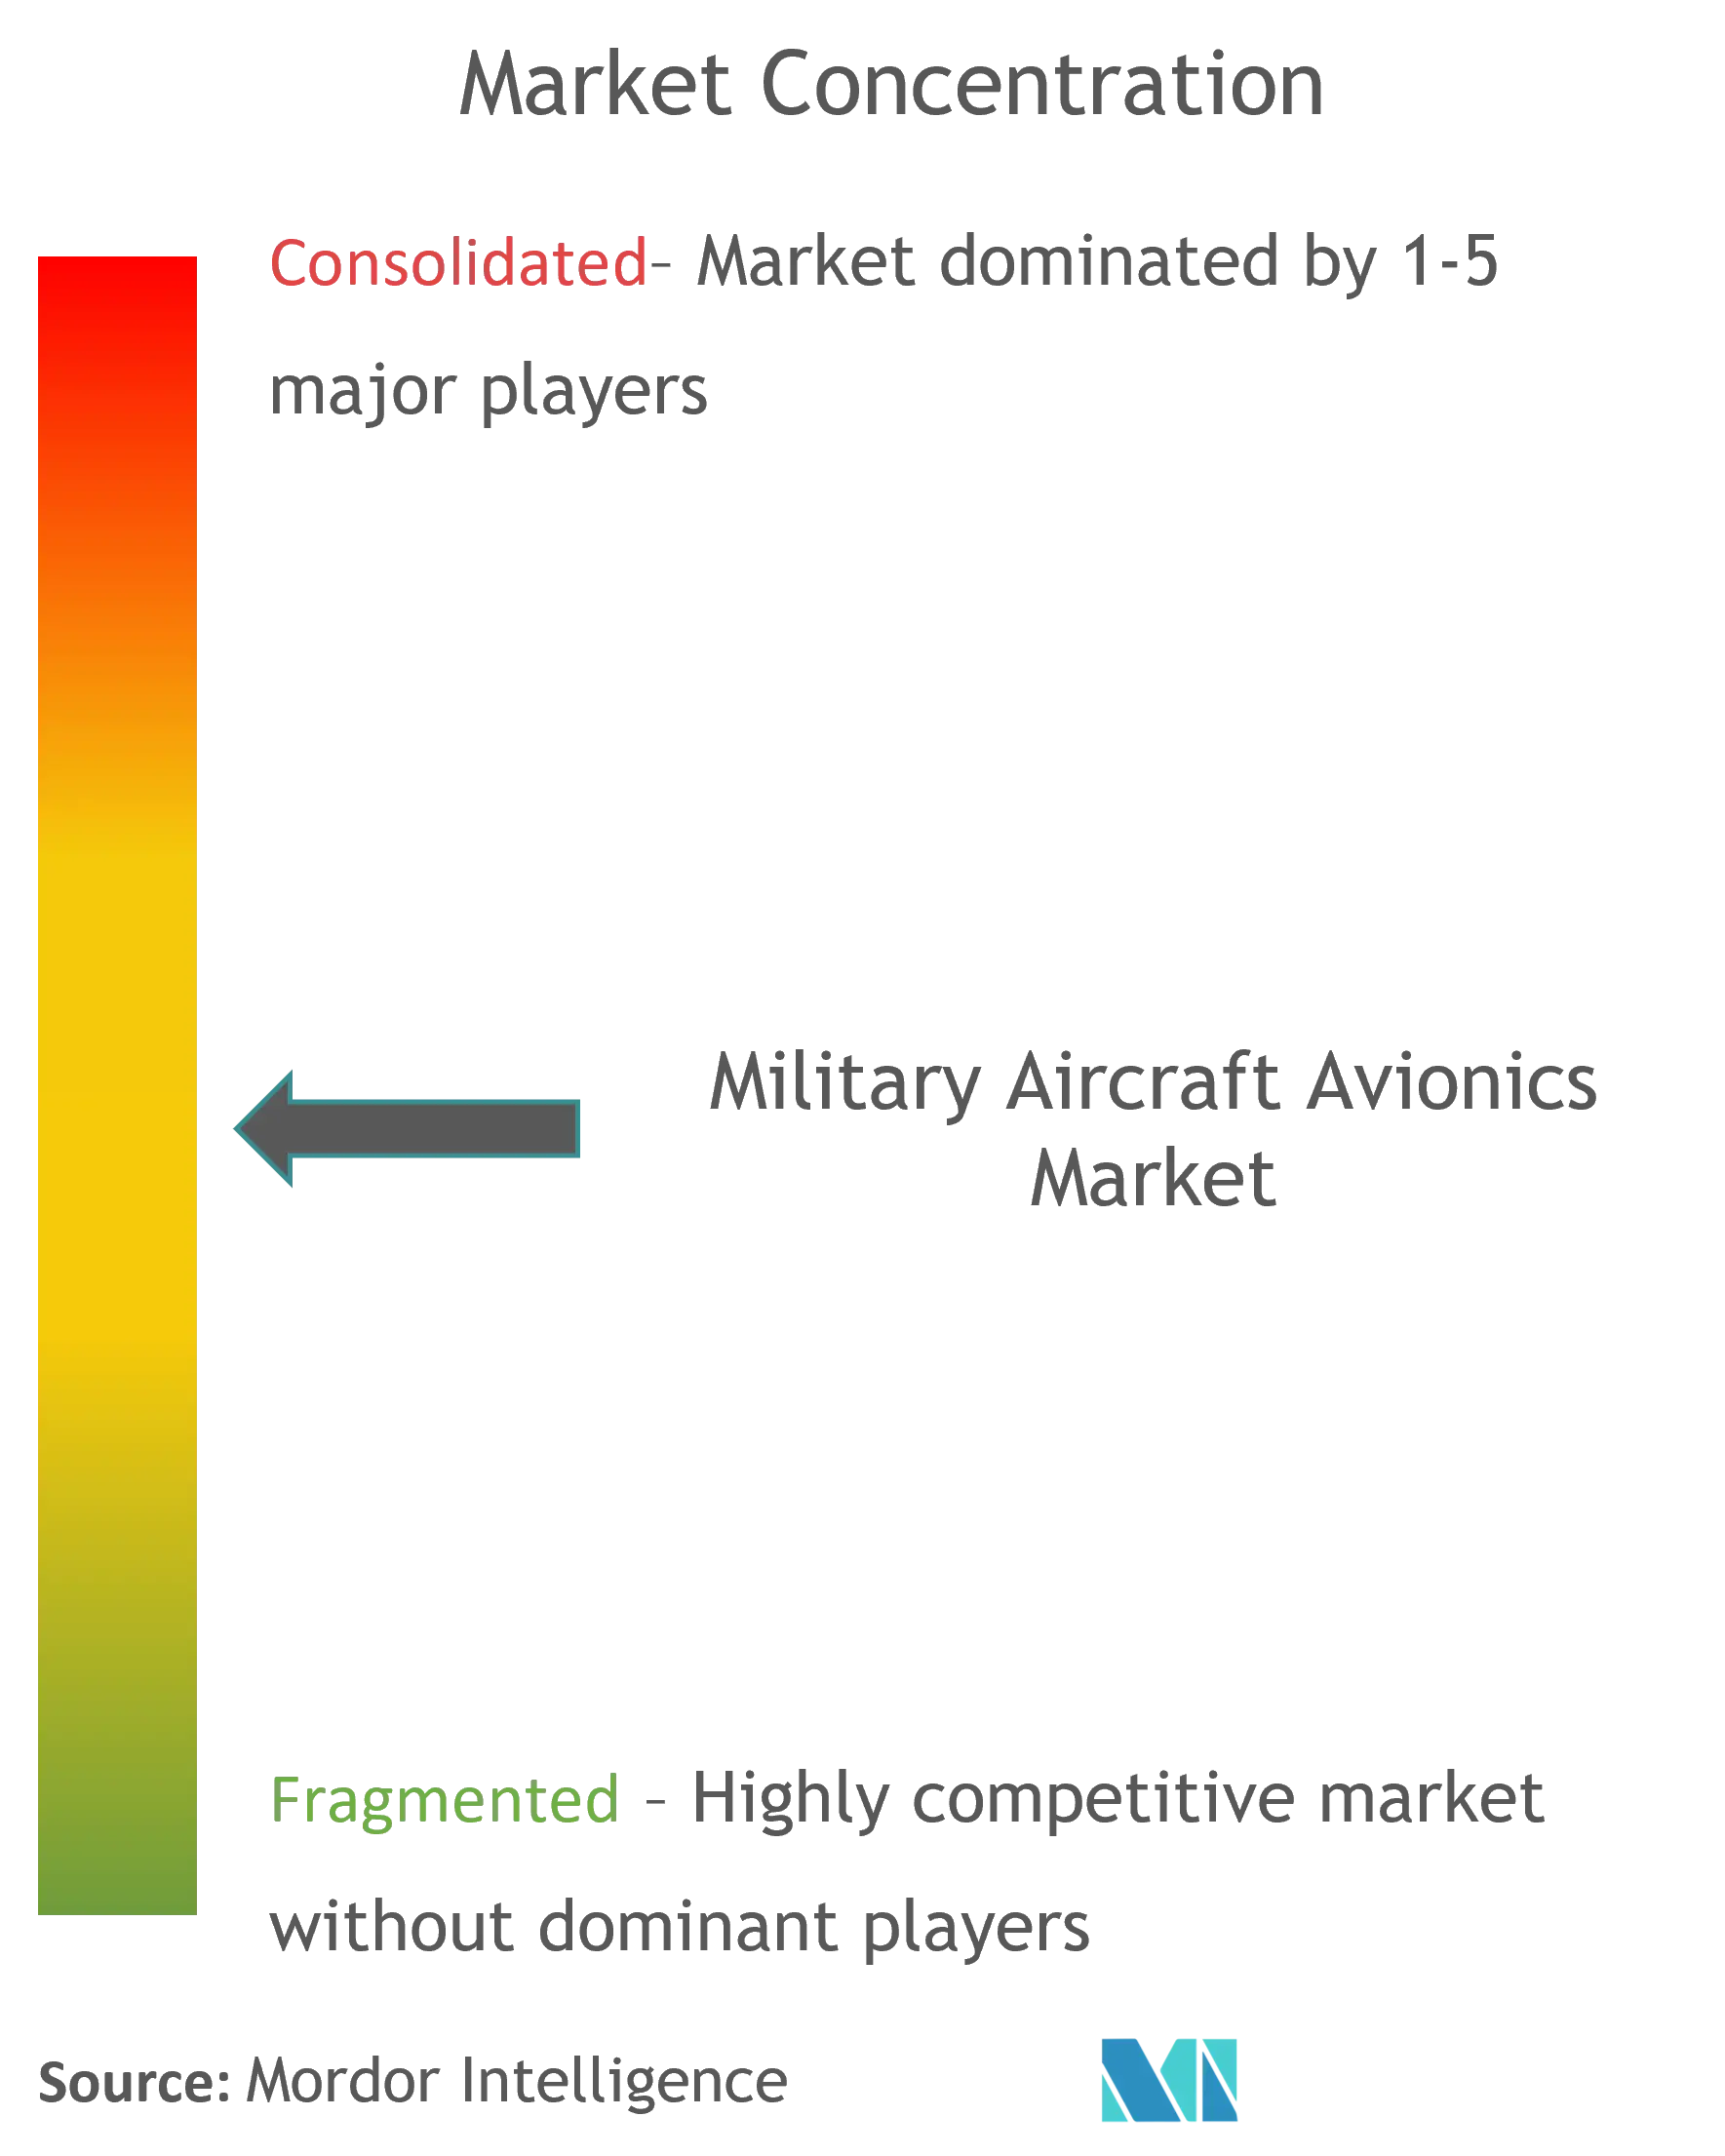 military aircraft avionics market CL.png